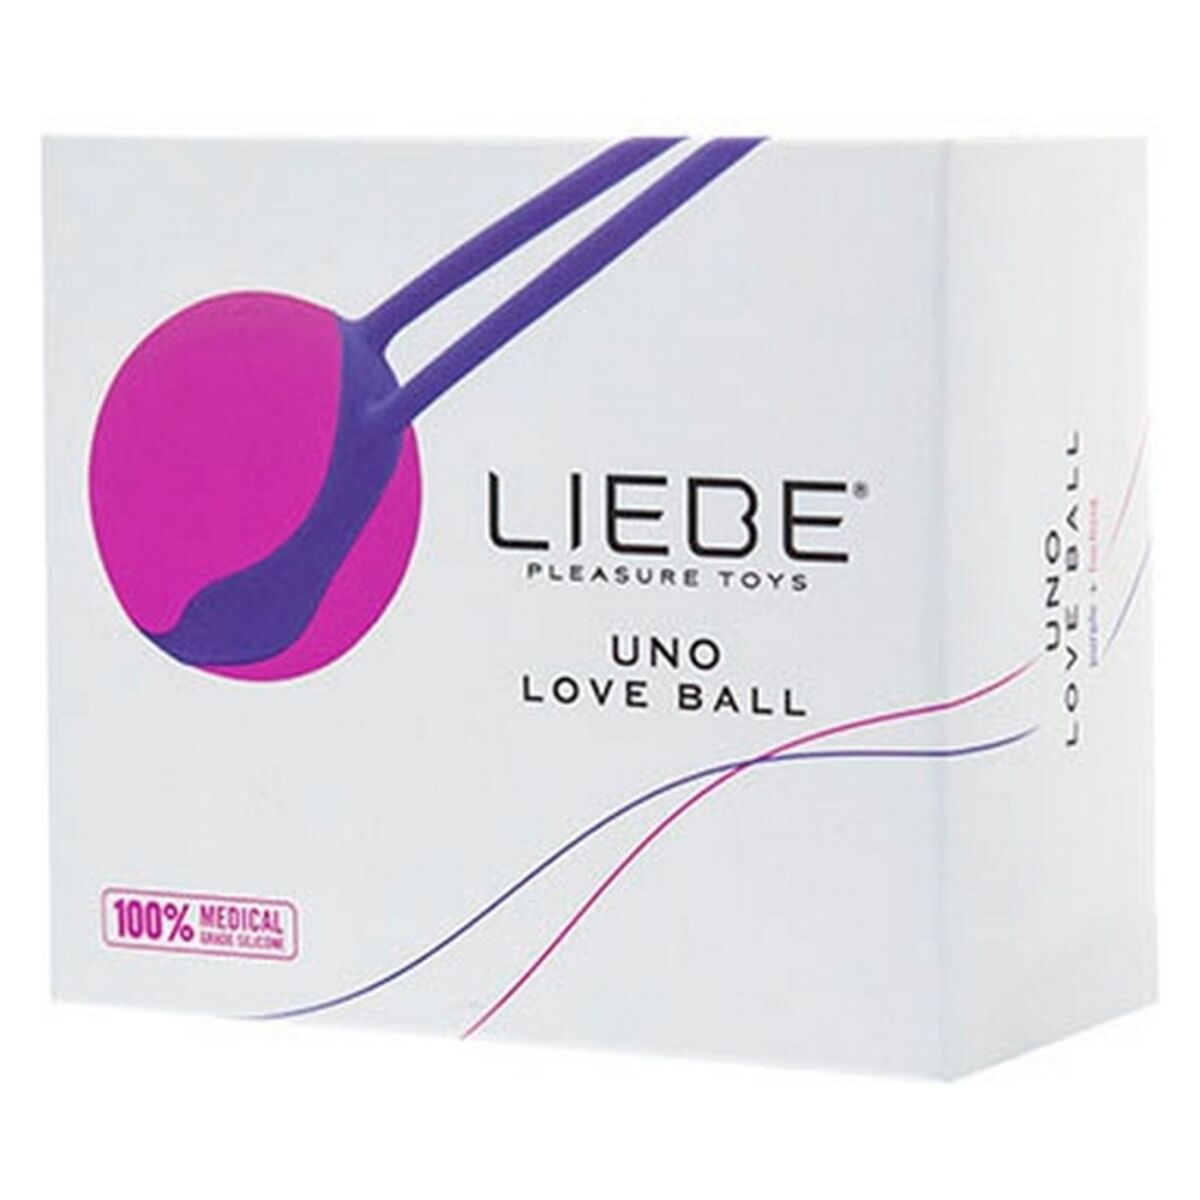 Kaufe Orgasmusbälle Liebe Uno Love Ball bei AWK Flagship um € 27.00